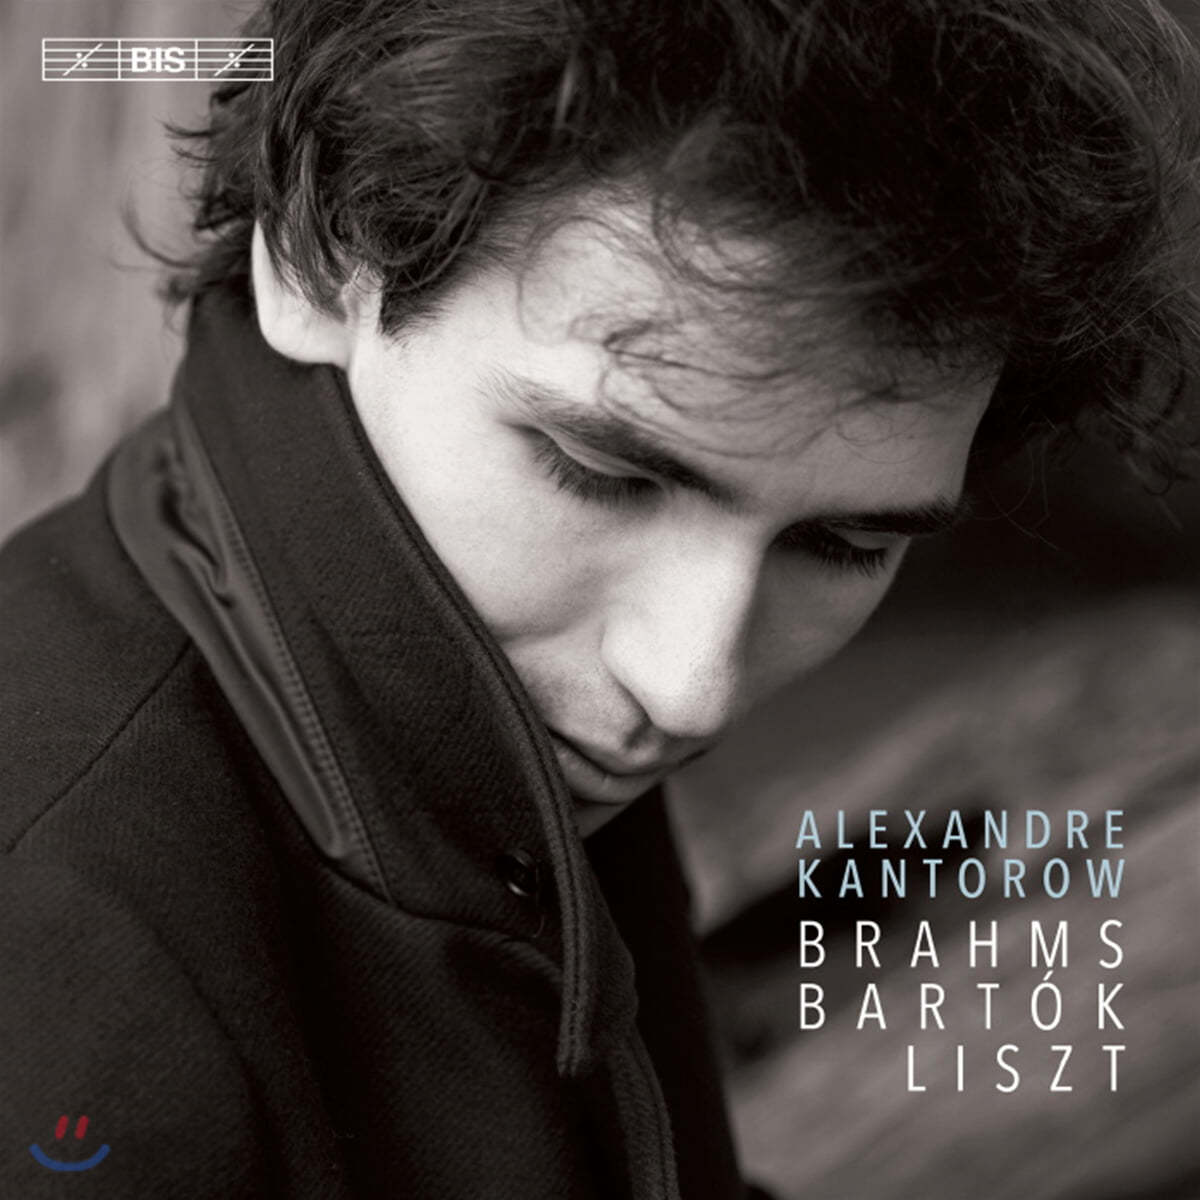 Alexandre Kantorow 브람스: 피아노 소나타 4번 / 바르톡: 랩소디 / 리스트: 헝가리 랩소디 - 알렉산더 칸토로프